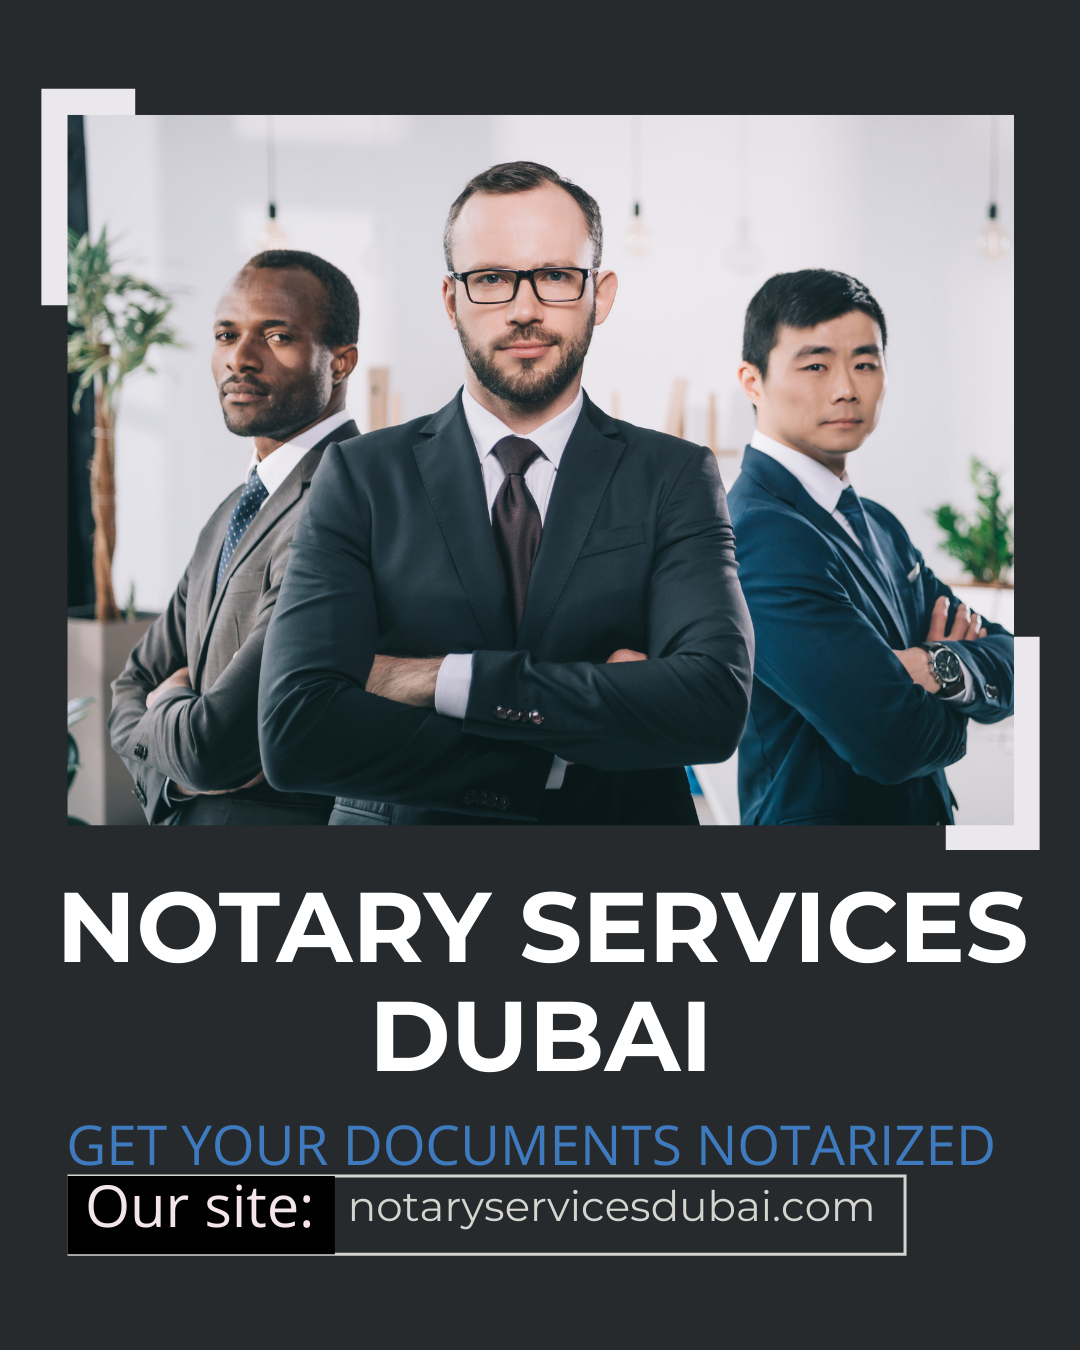 Document attestation in UAE